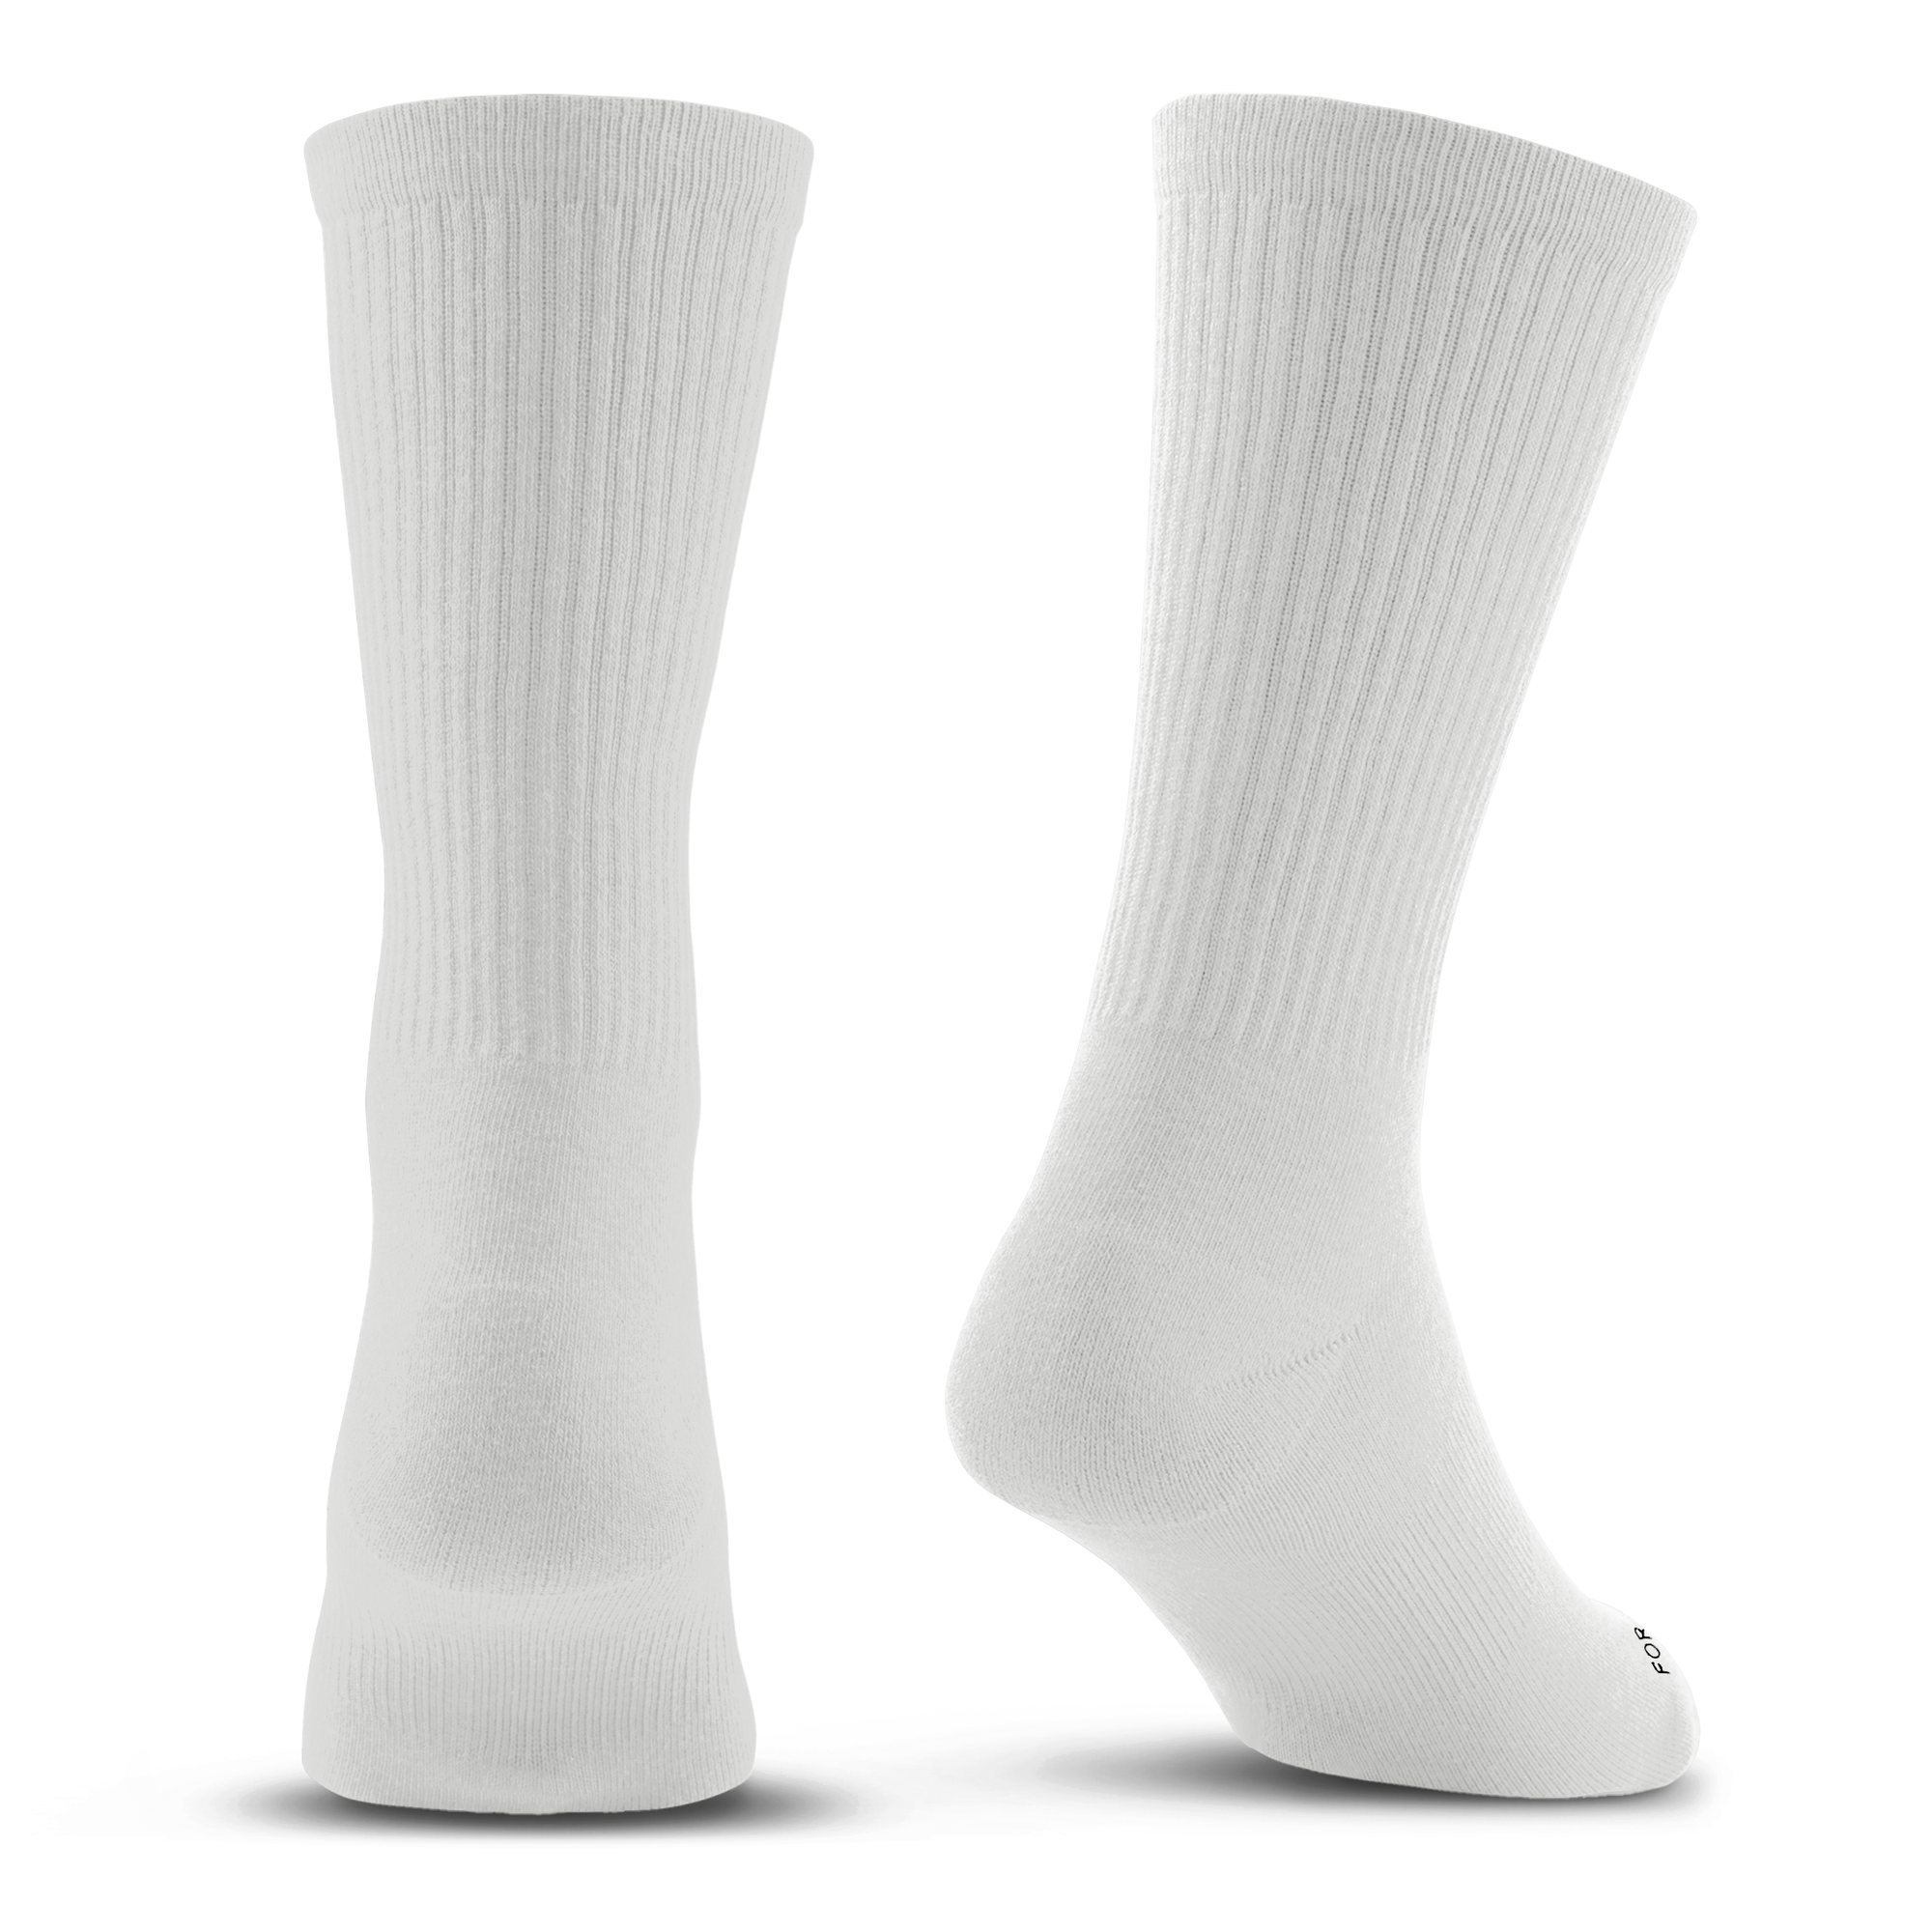 Premium Crew Socks 3 Pack - White